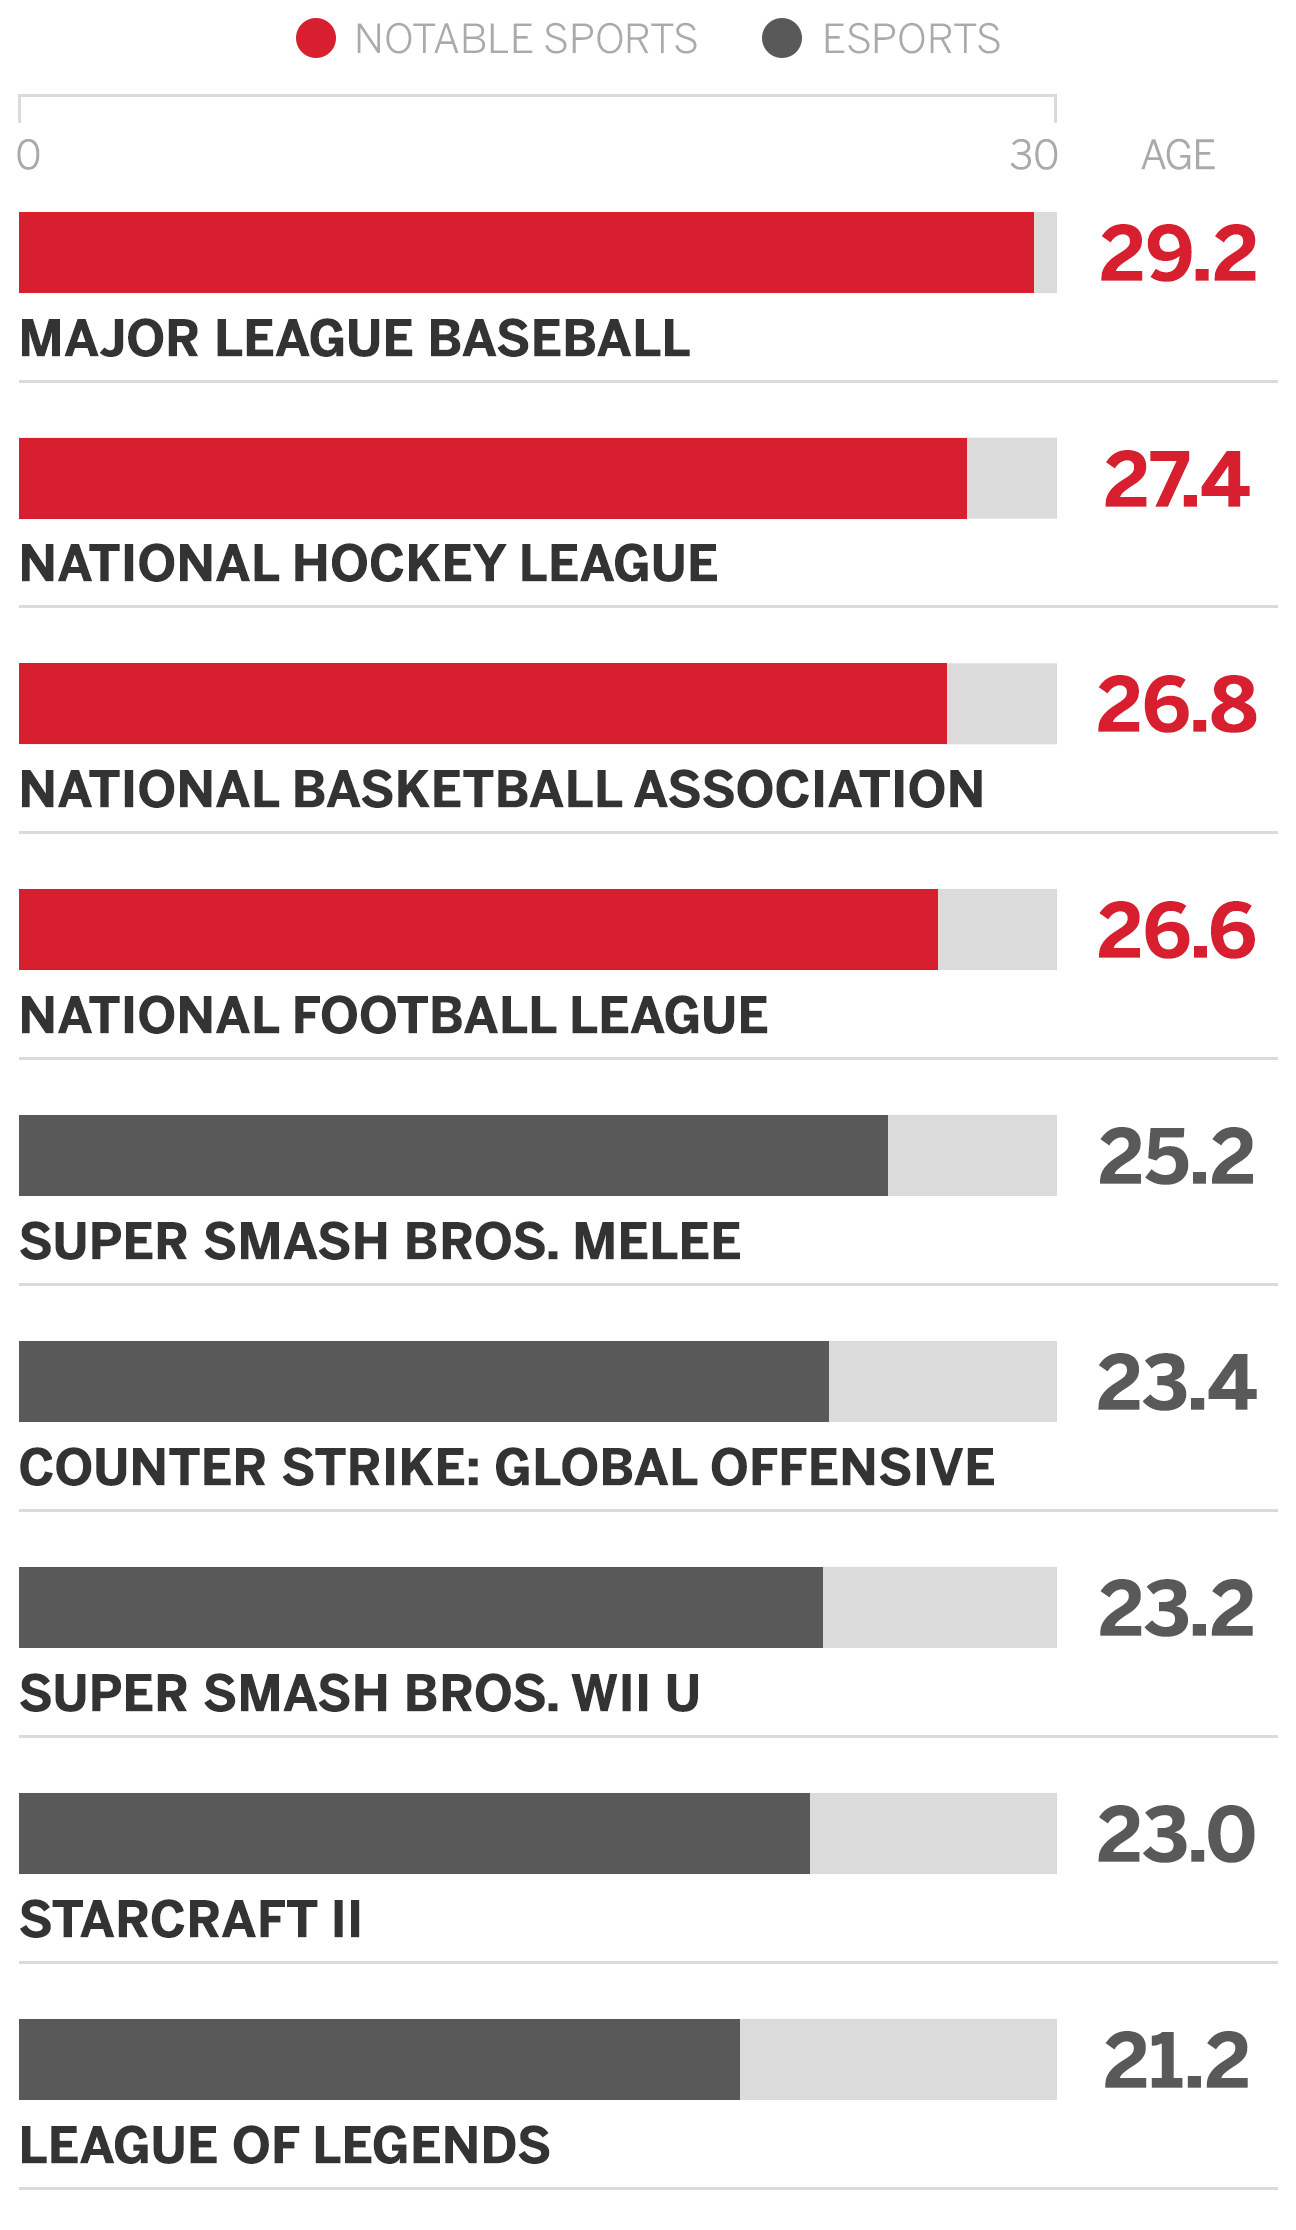 The average age in esports versus NFL, NBA, MLB, NHL